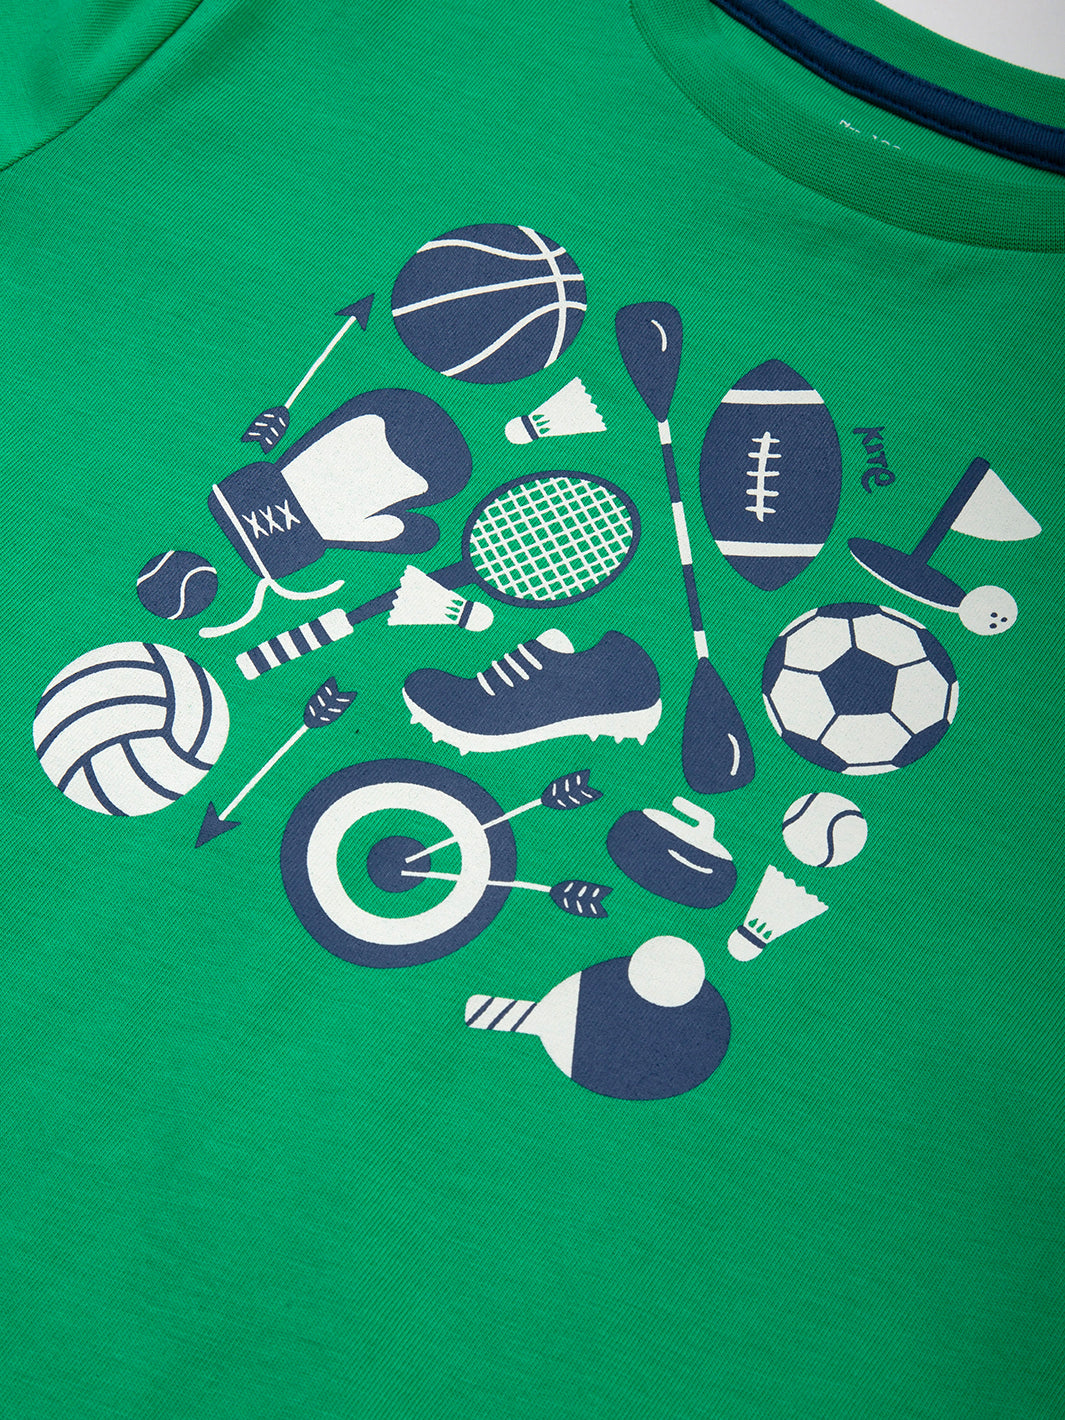 Kite Sport-tastic t-shirt